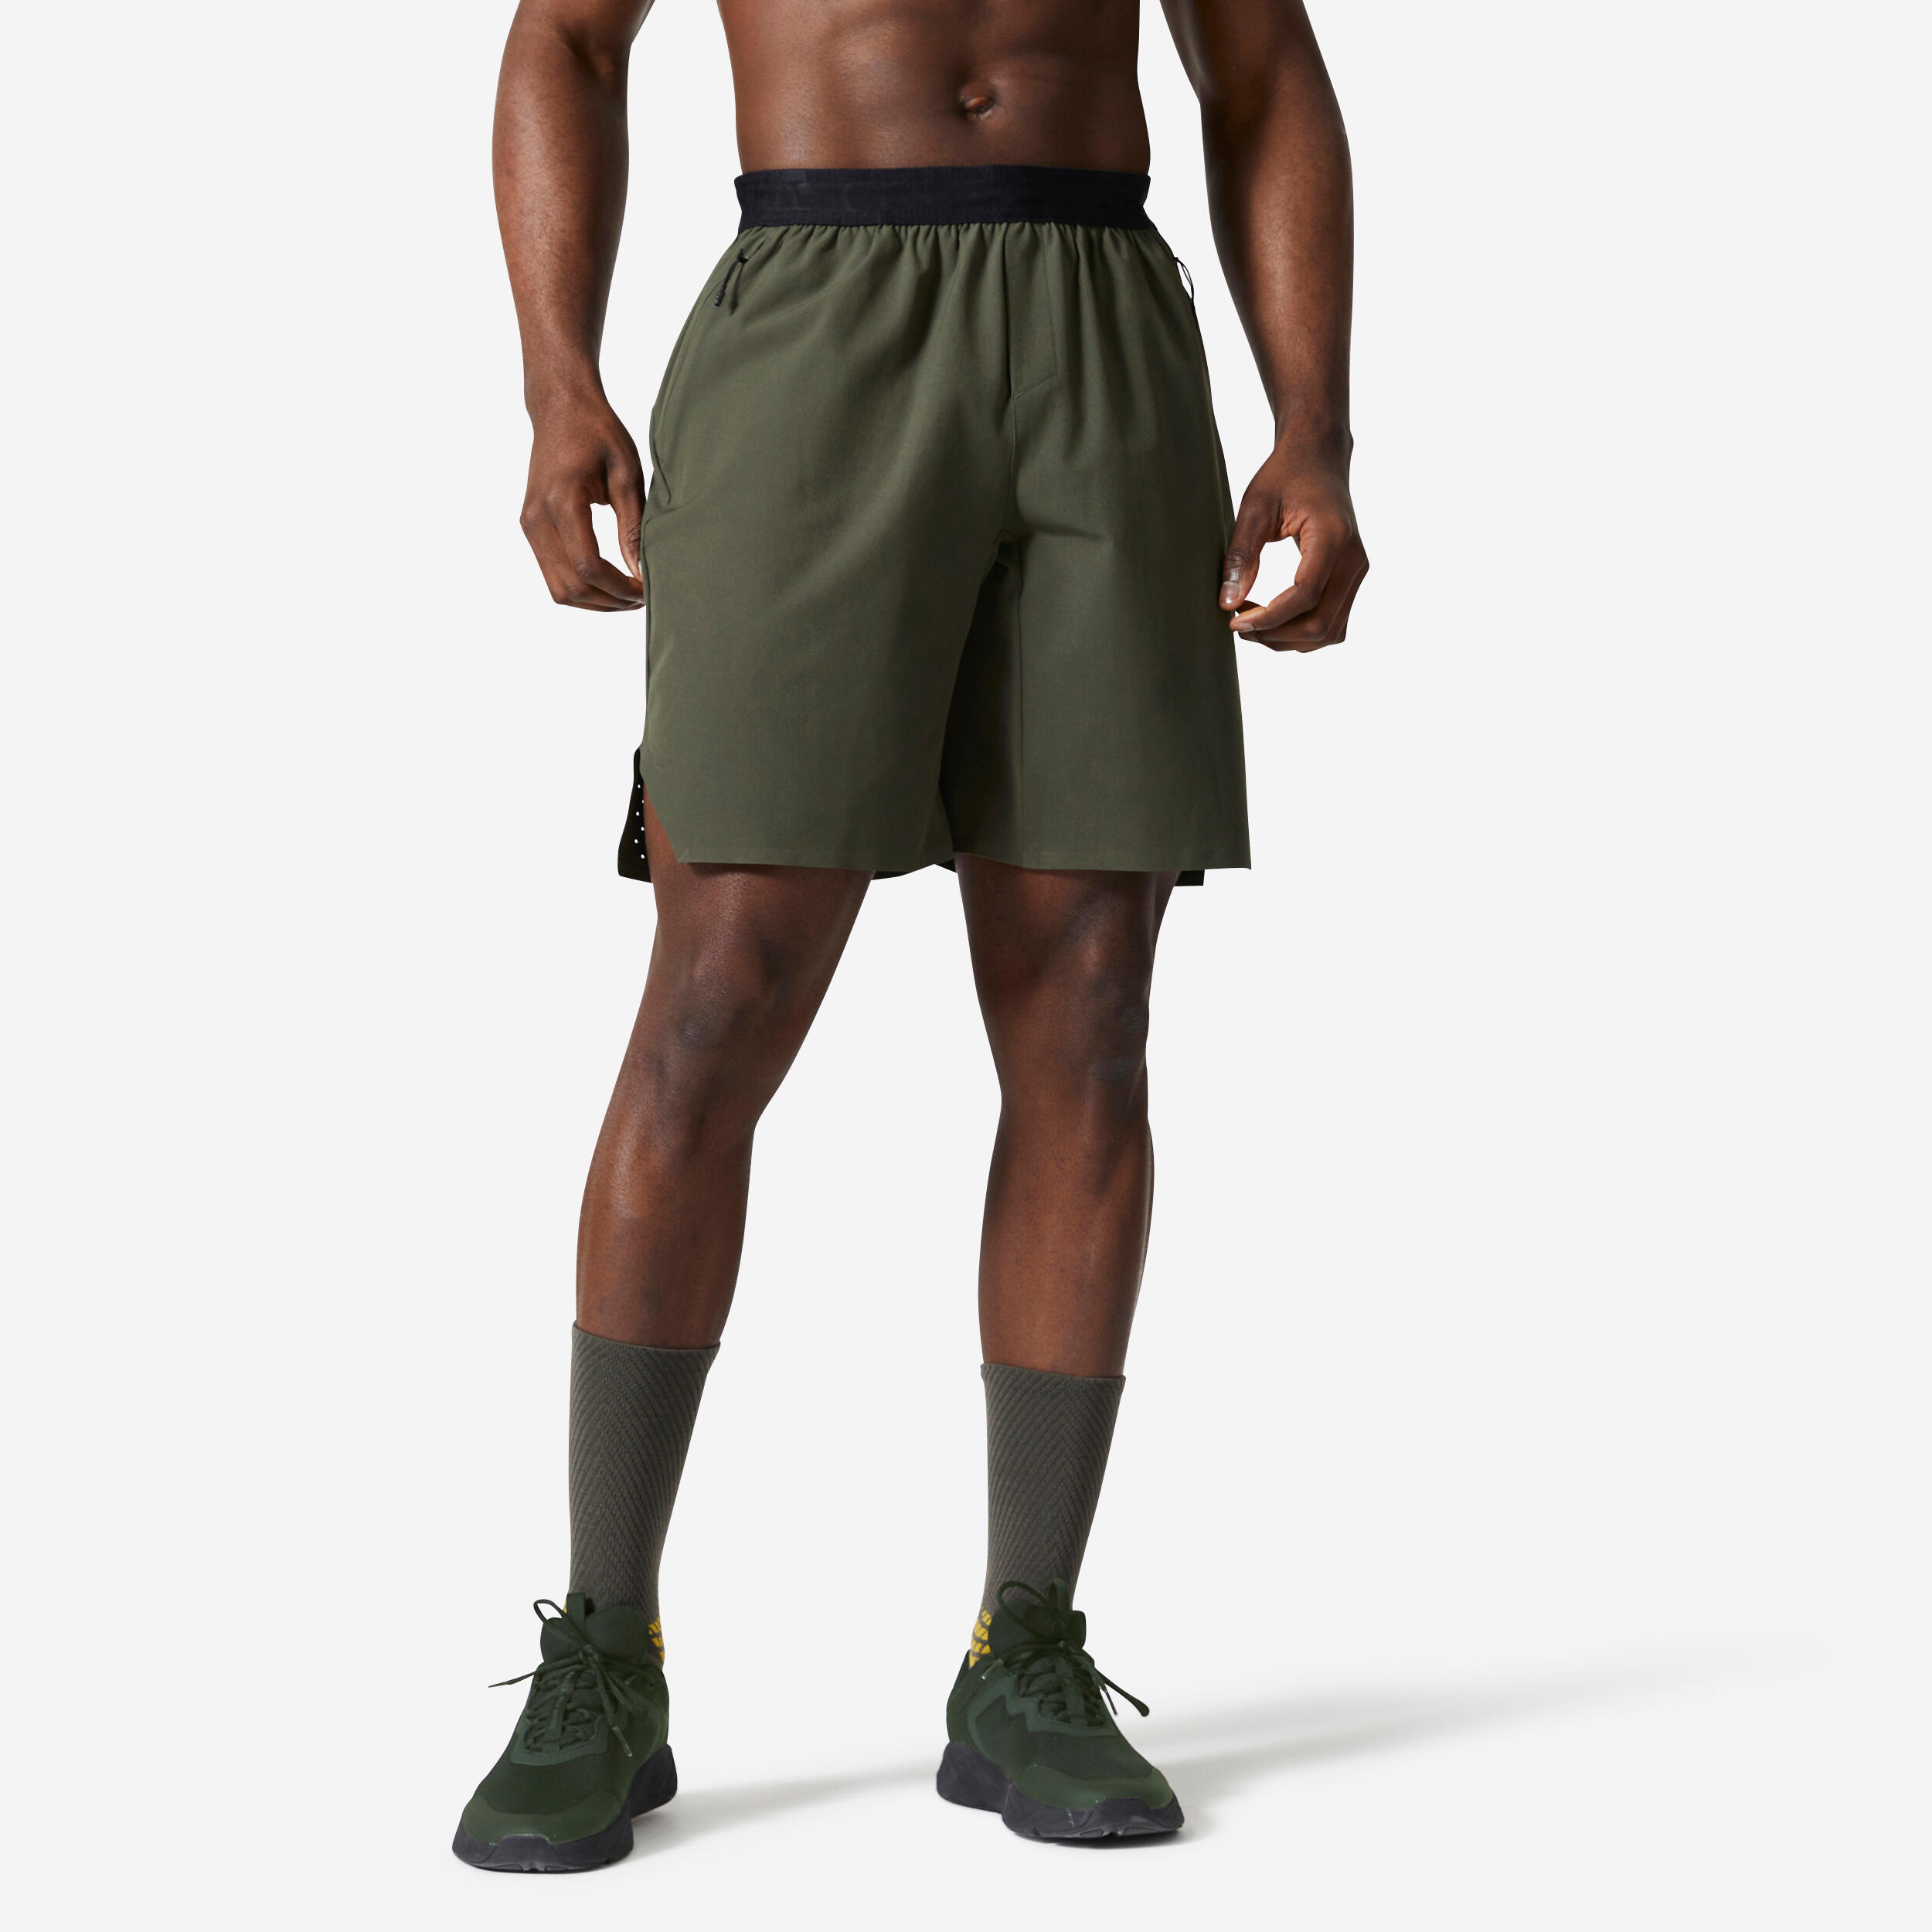 Men’s Breathable Cross-Training Shorts